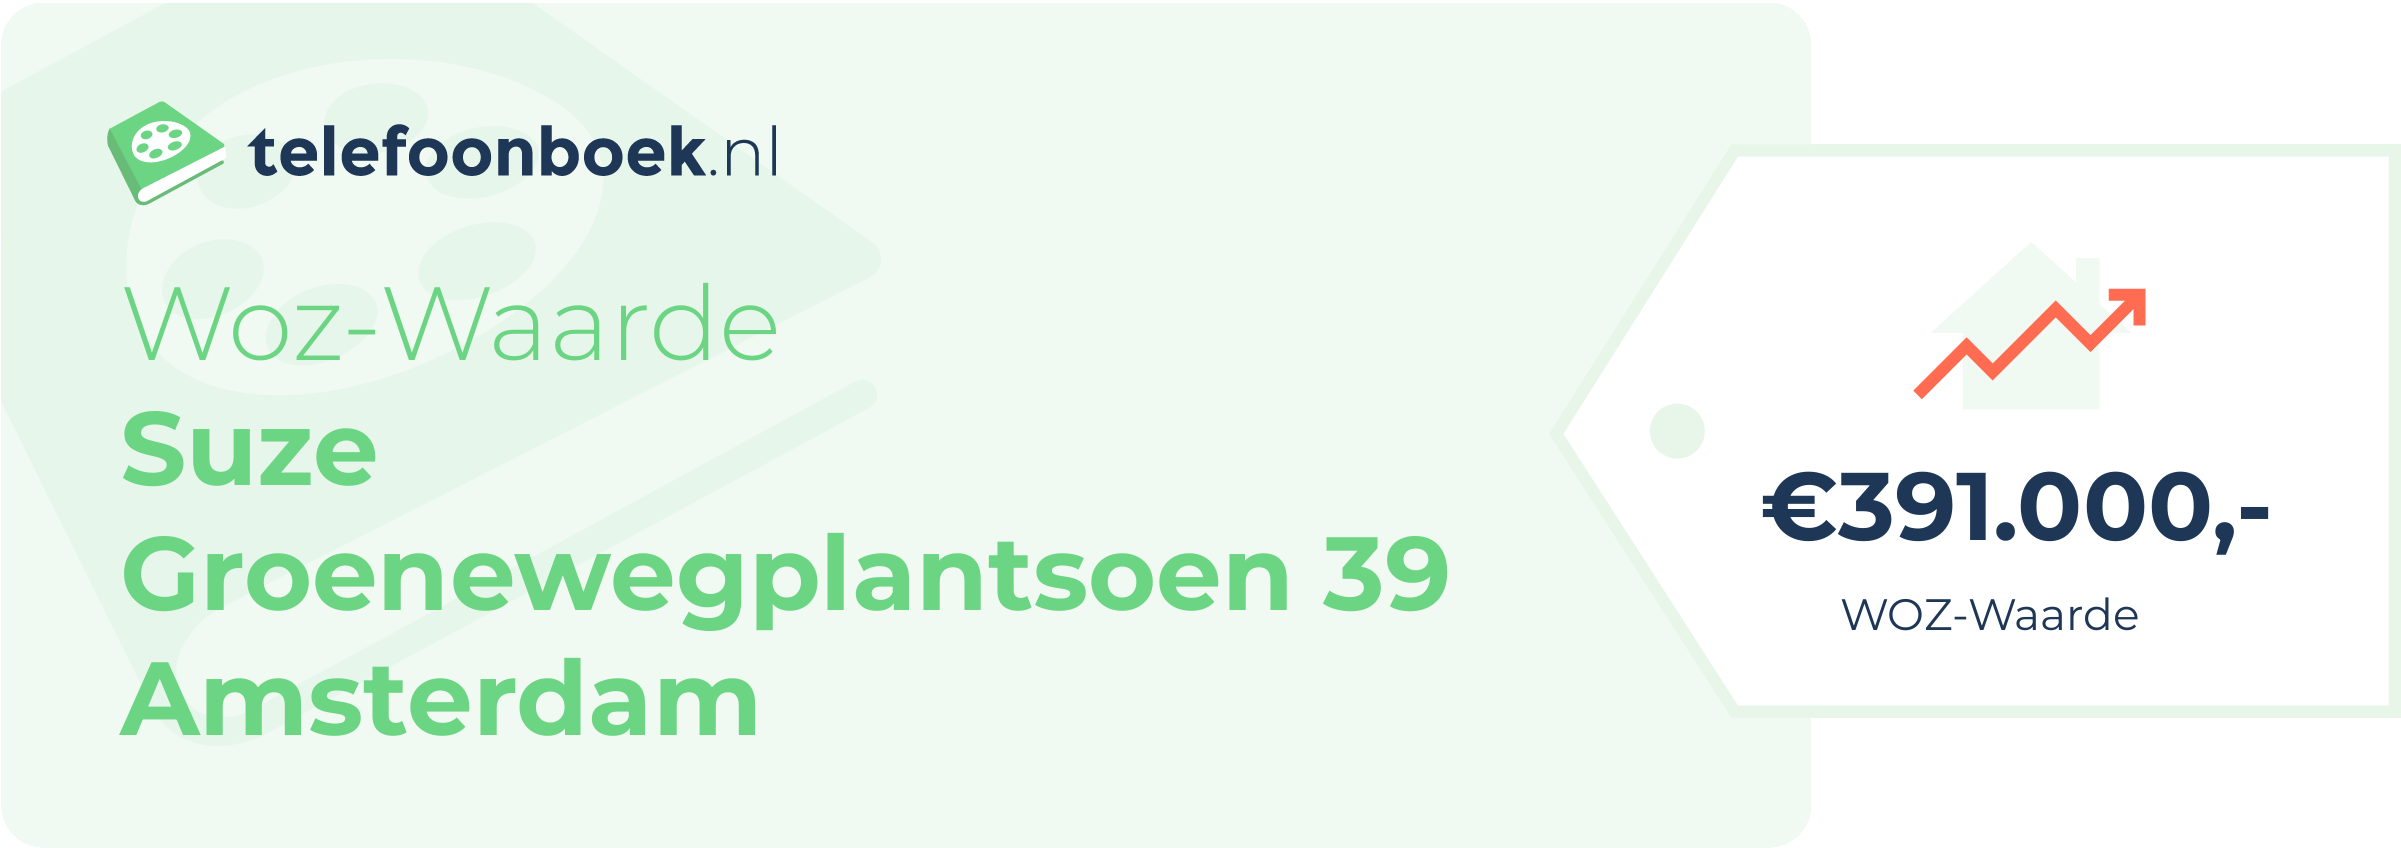 WOZ-waarde Suze Groenewegplantsoen 39 Amsterdam